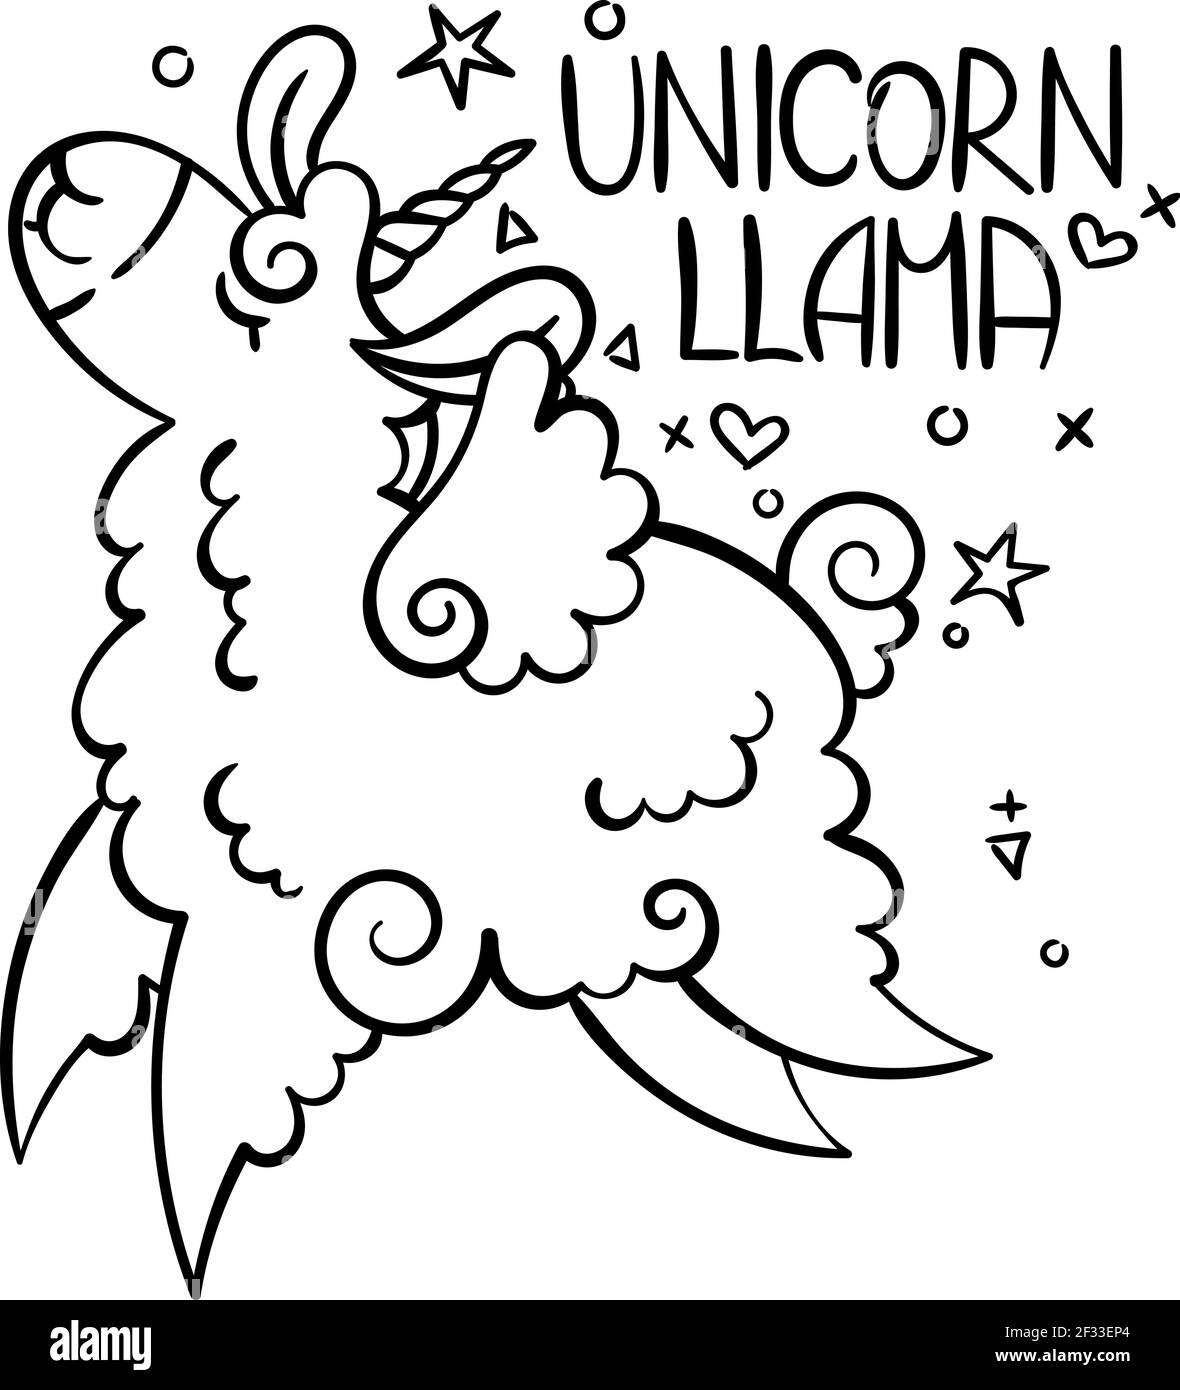 Unicorn Llama. Cute curly alpaca unicorn is flying and dancing ...